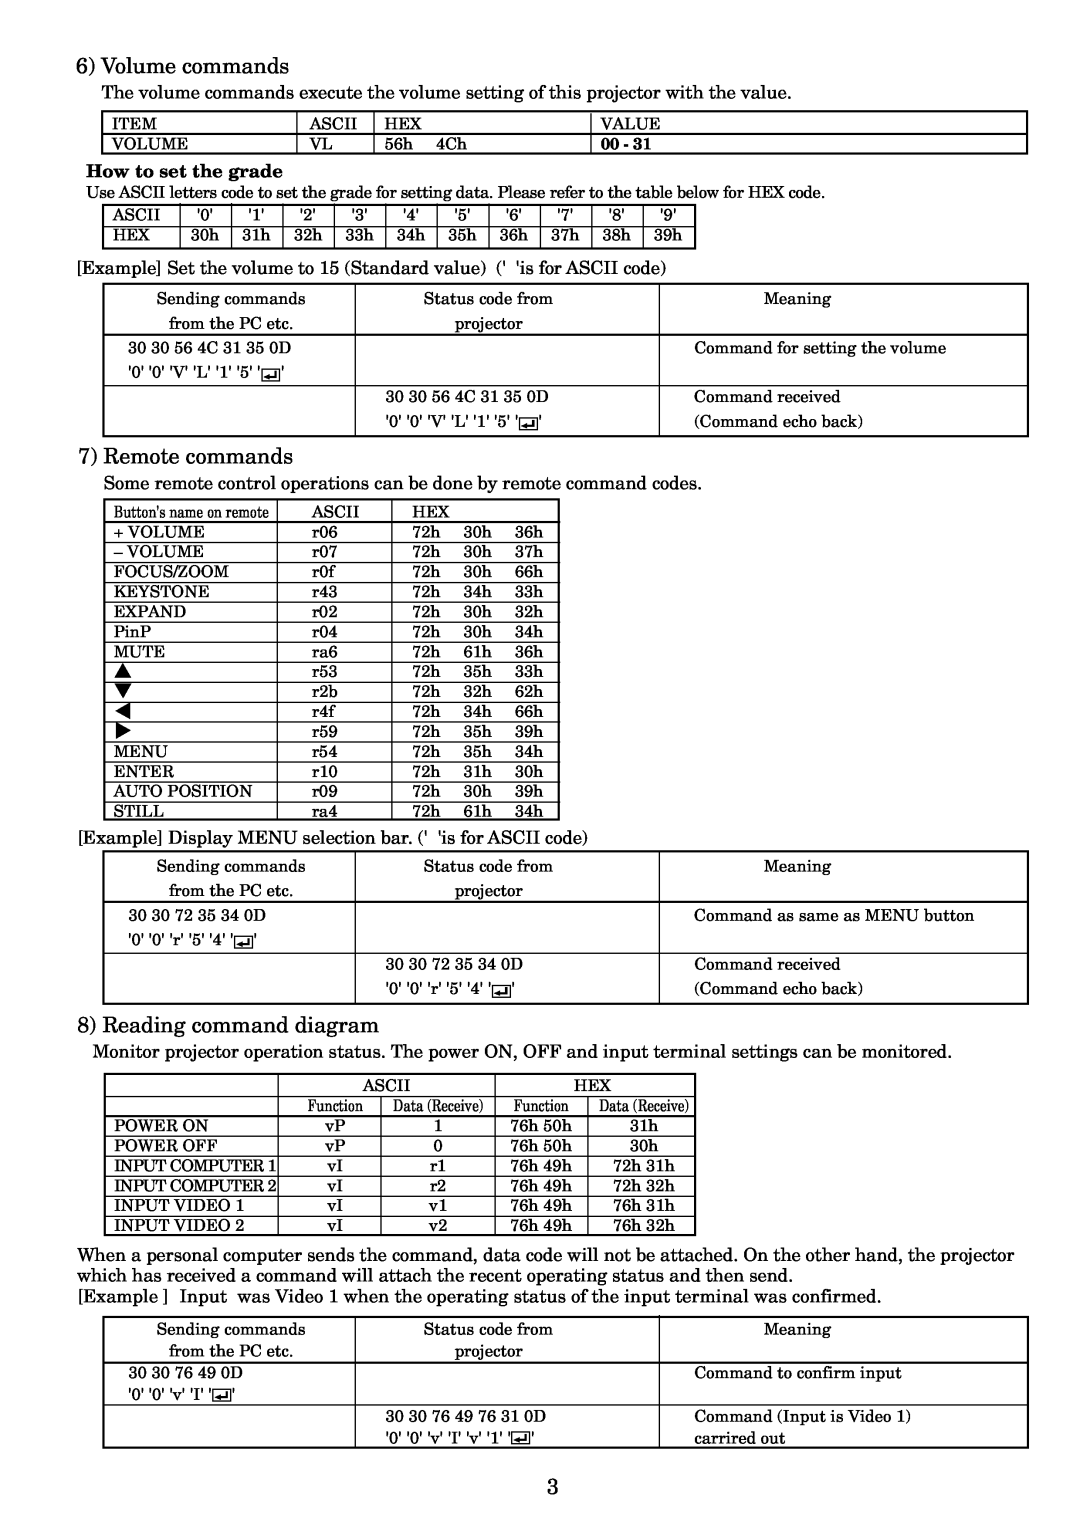 Mitsubishi Electronics X490U manual Volume commands, Remote commands, Reading command diagram, How to set the grade 